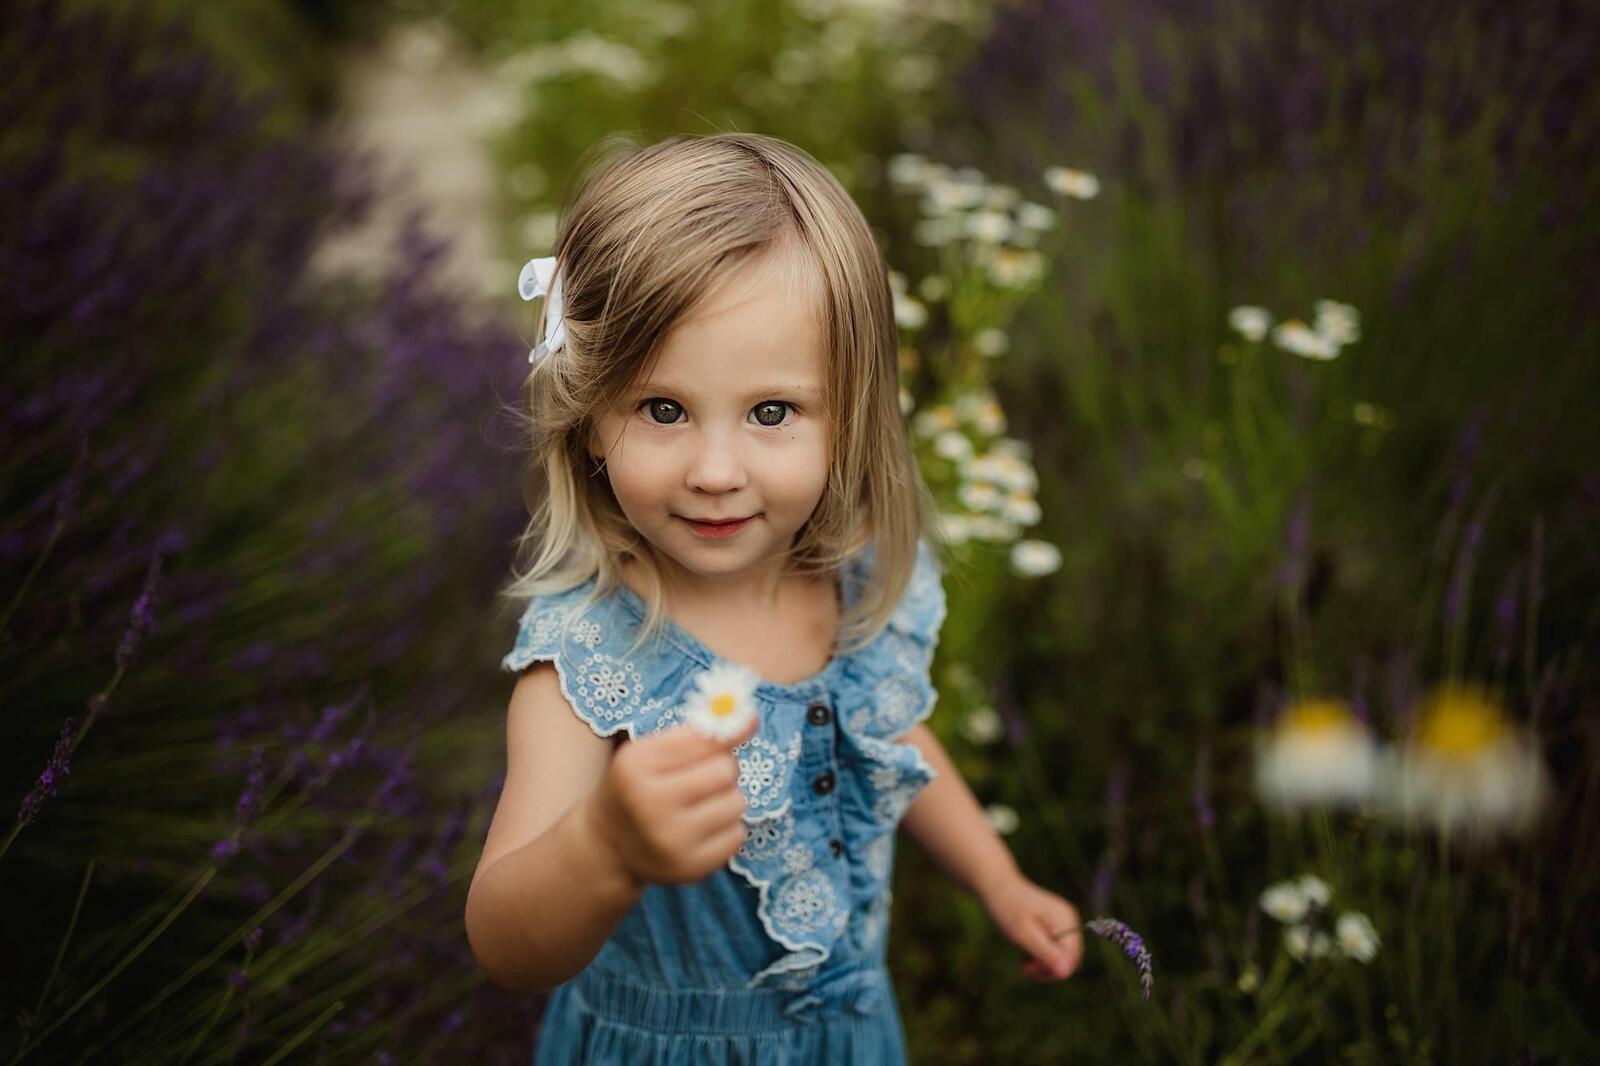 girl holding daisy towards camera in field of flowers